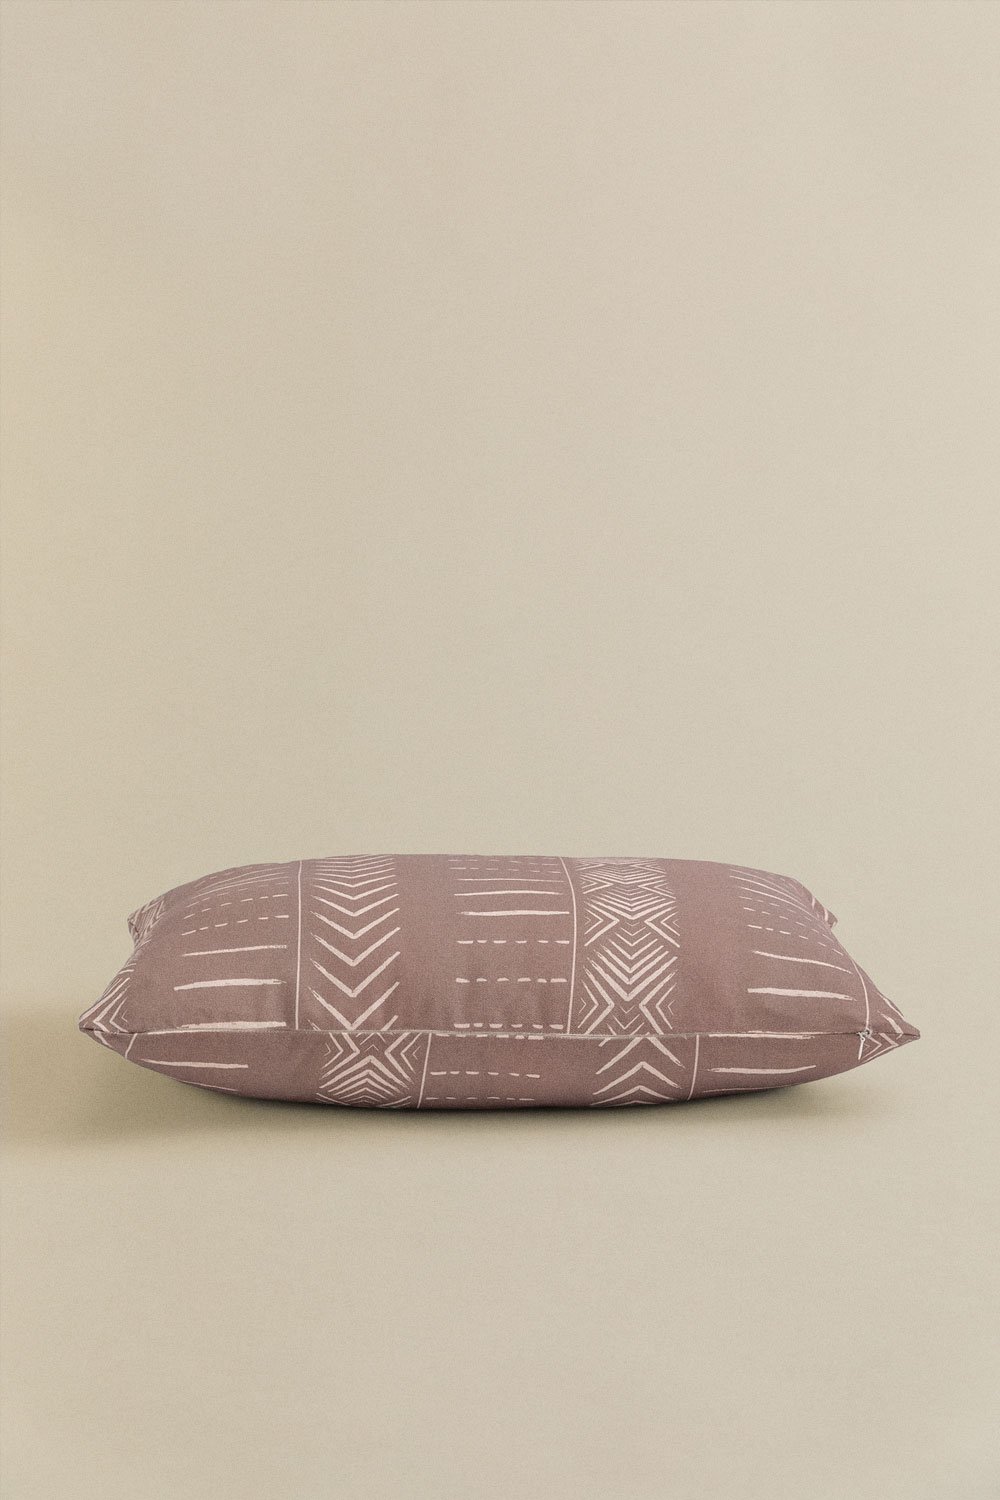 Cuscino rettangolare in cotone (40x60 cm) Mial - SKLUM